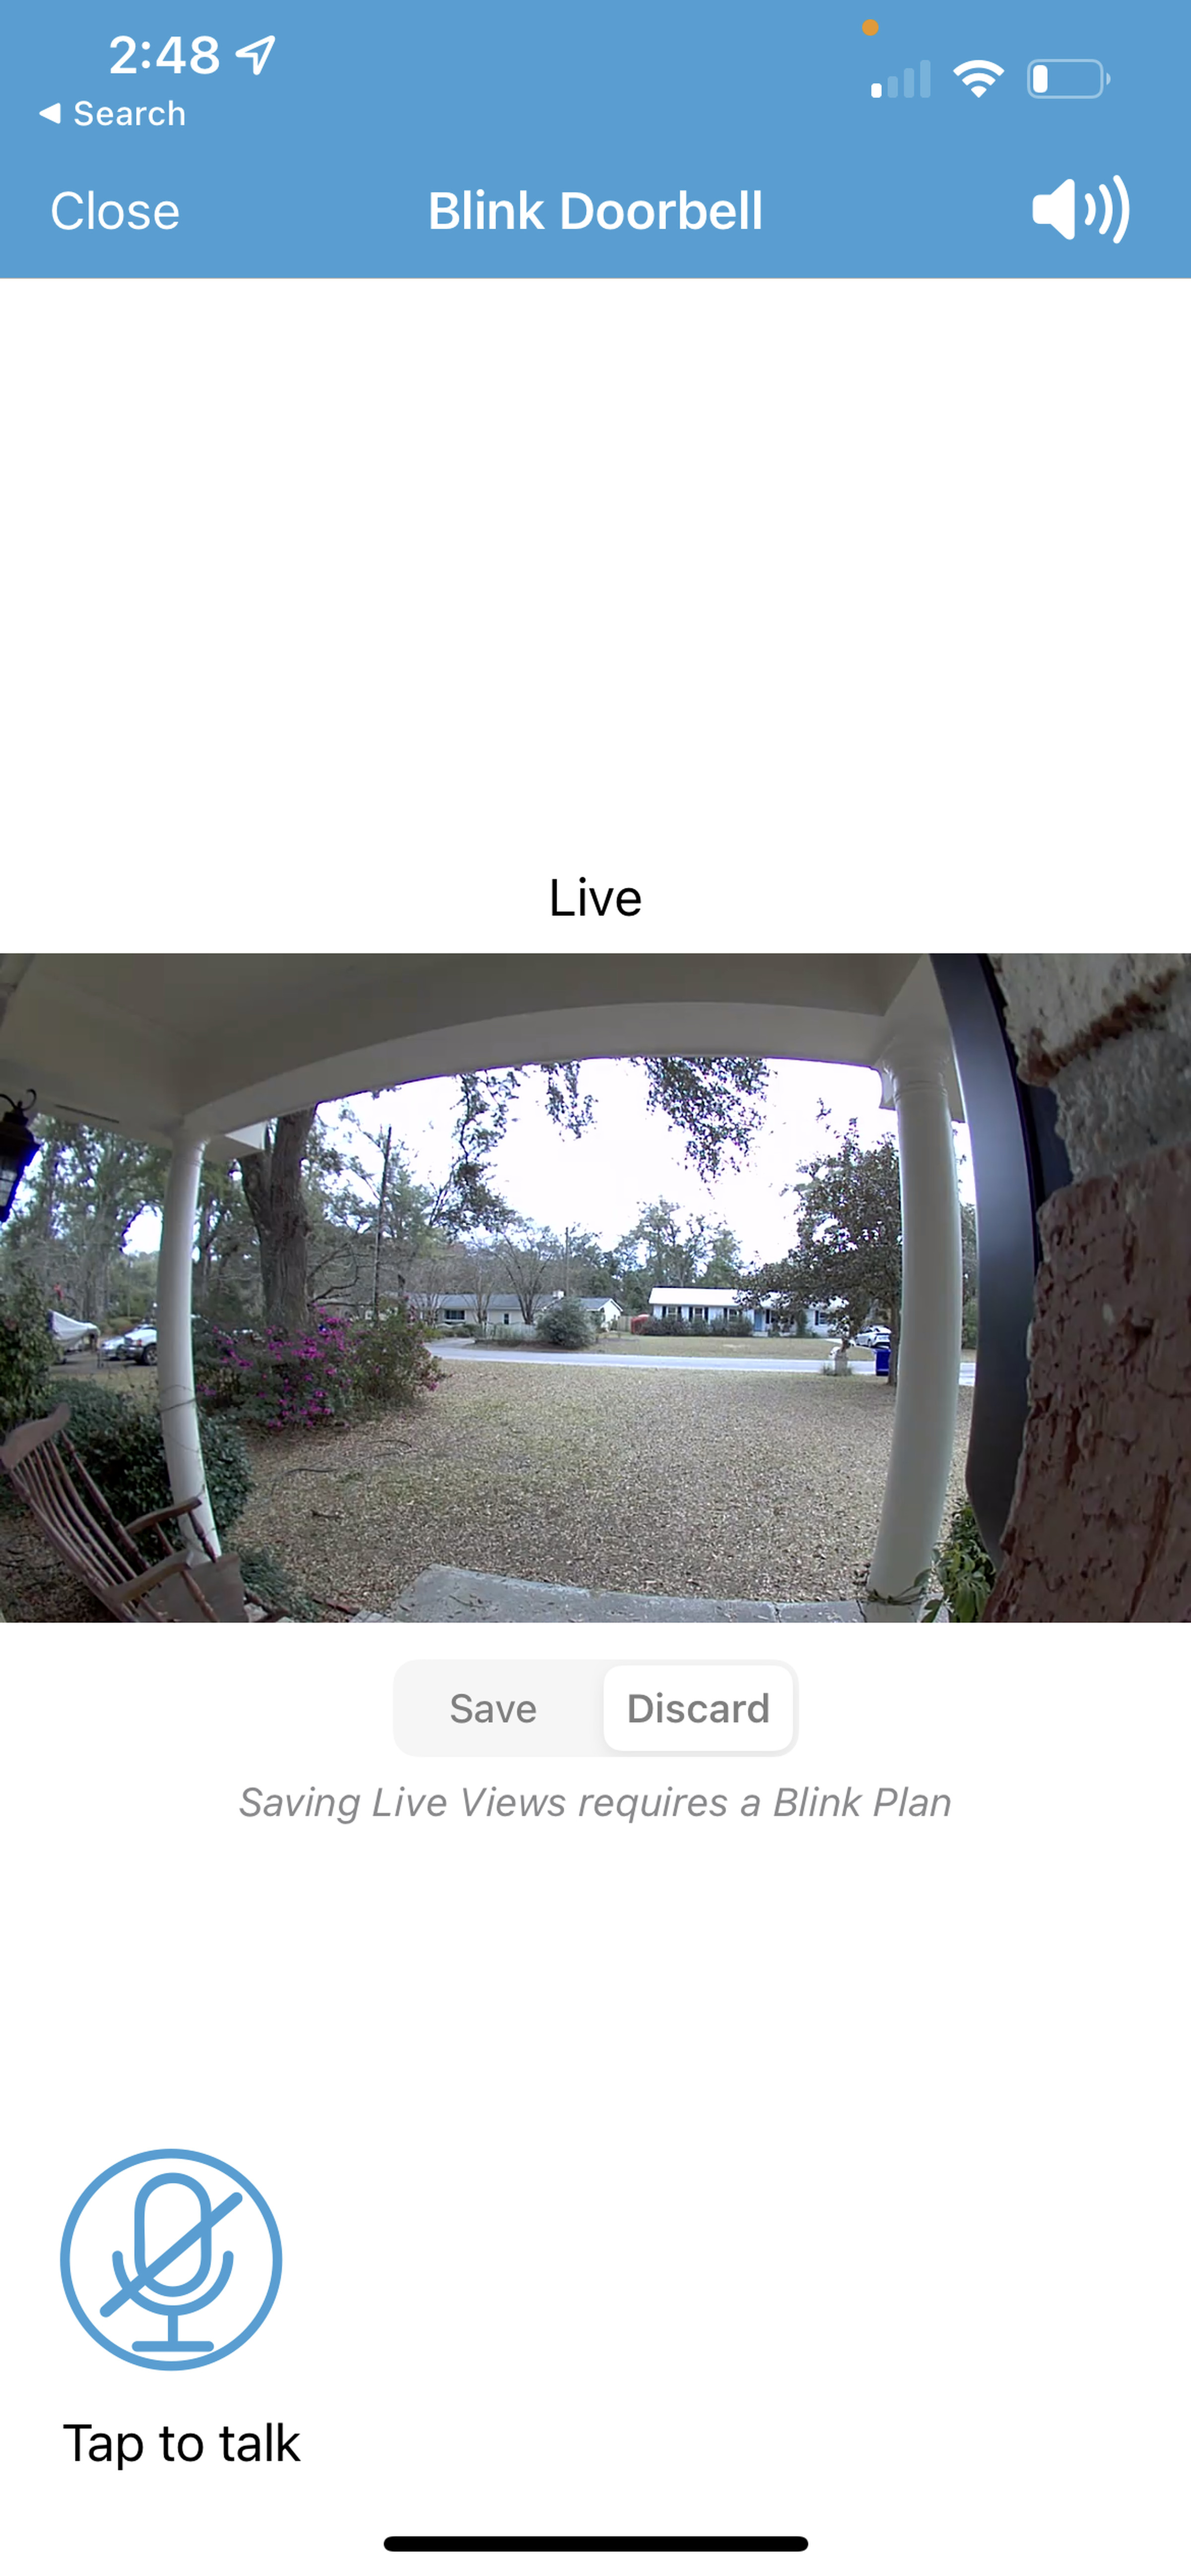 The Blink Video Doorbell has a 16:9 aspect ratio.